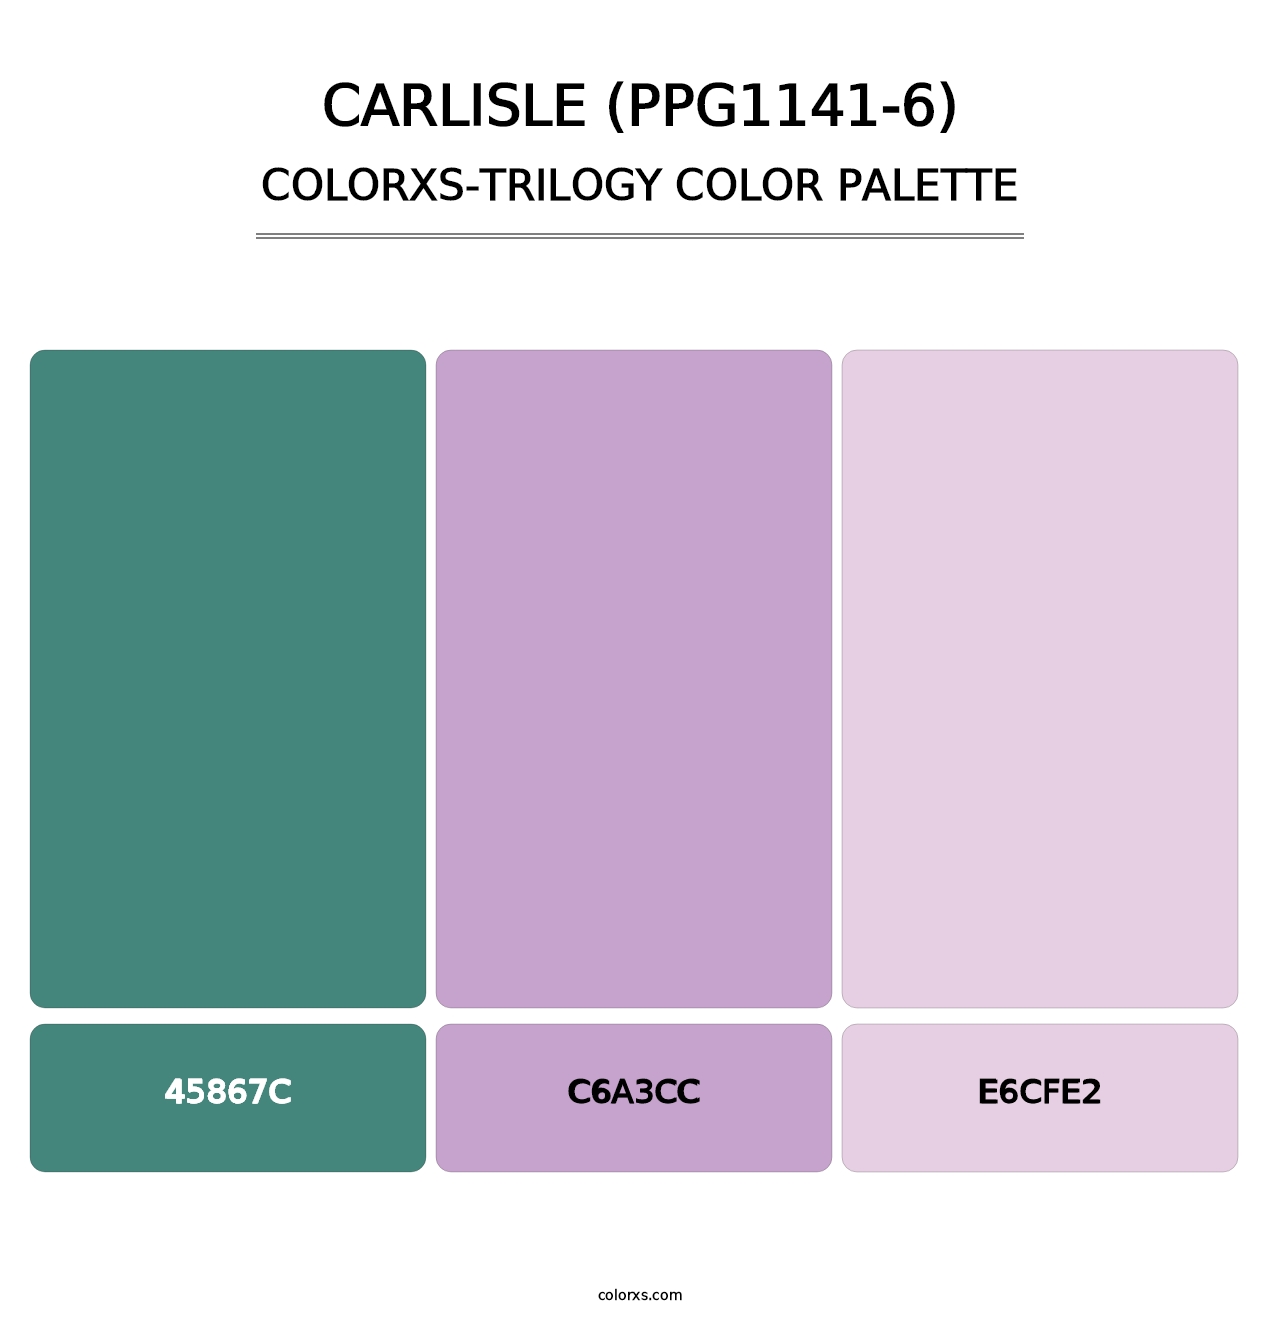 Carlisle (PPG1141-6) - Colorxs Trilogy Palette